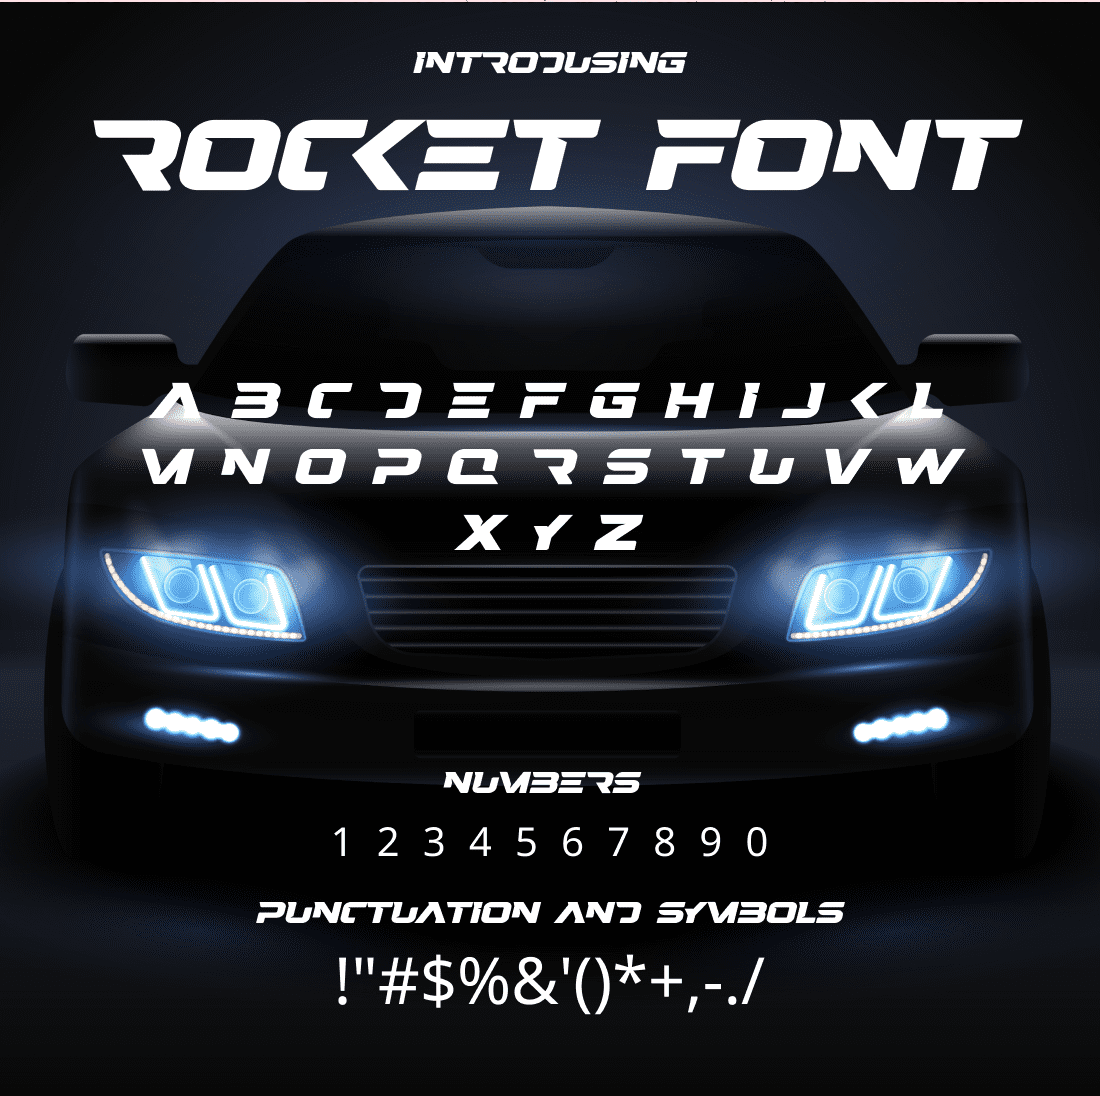 Rocket Font - main image preview.